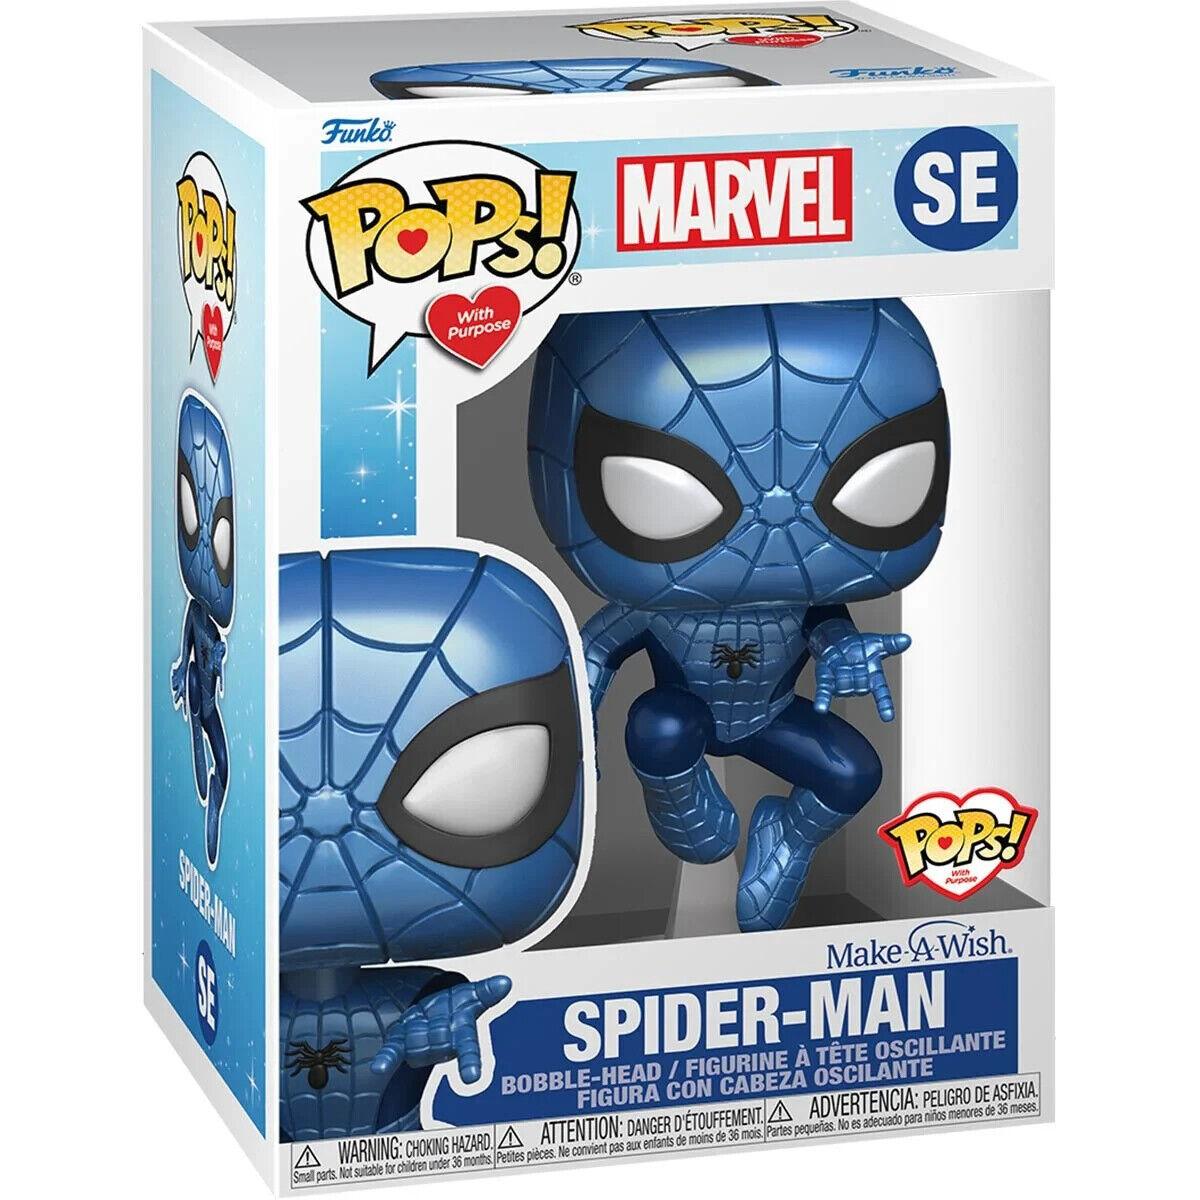 Pop! With Purpose - Make-A-Wish - Spider-Man - #SE - Hobby Champion Inc